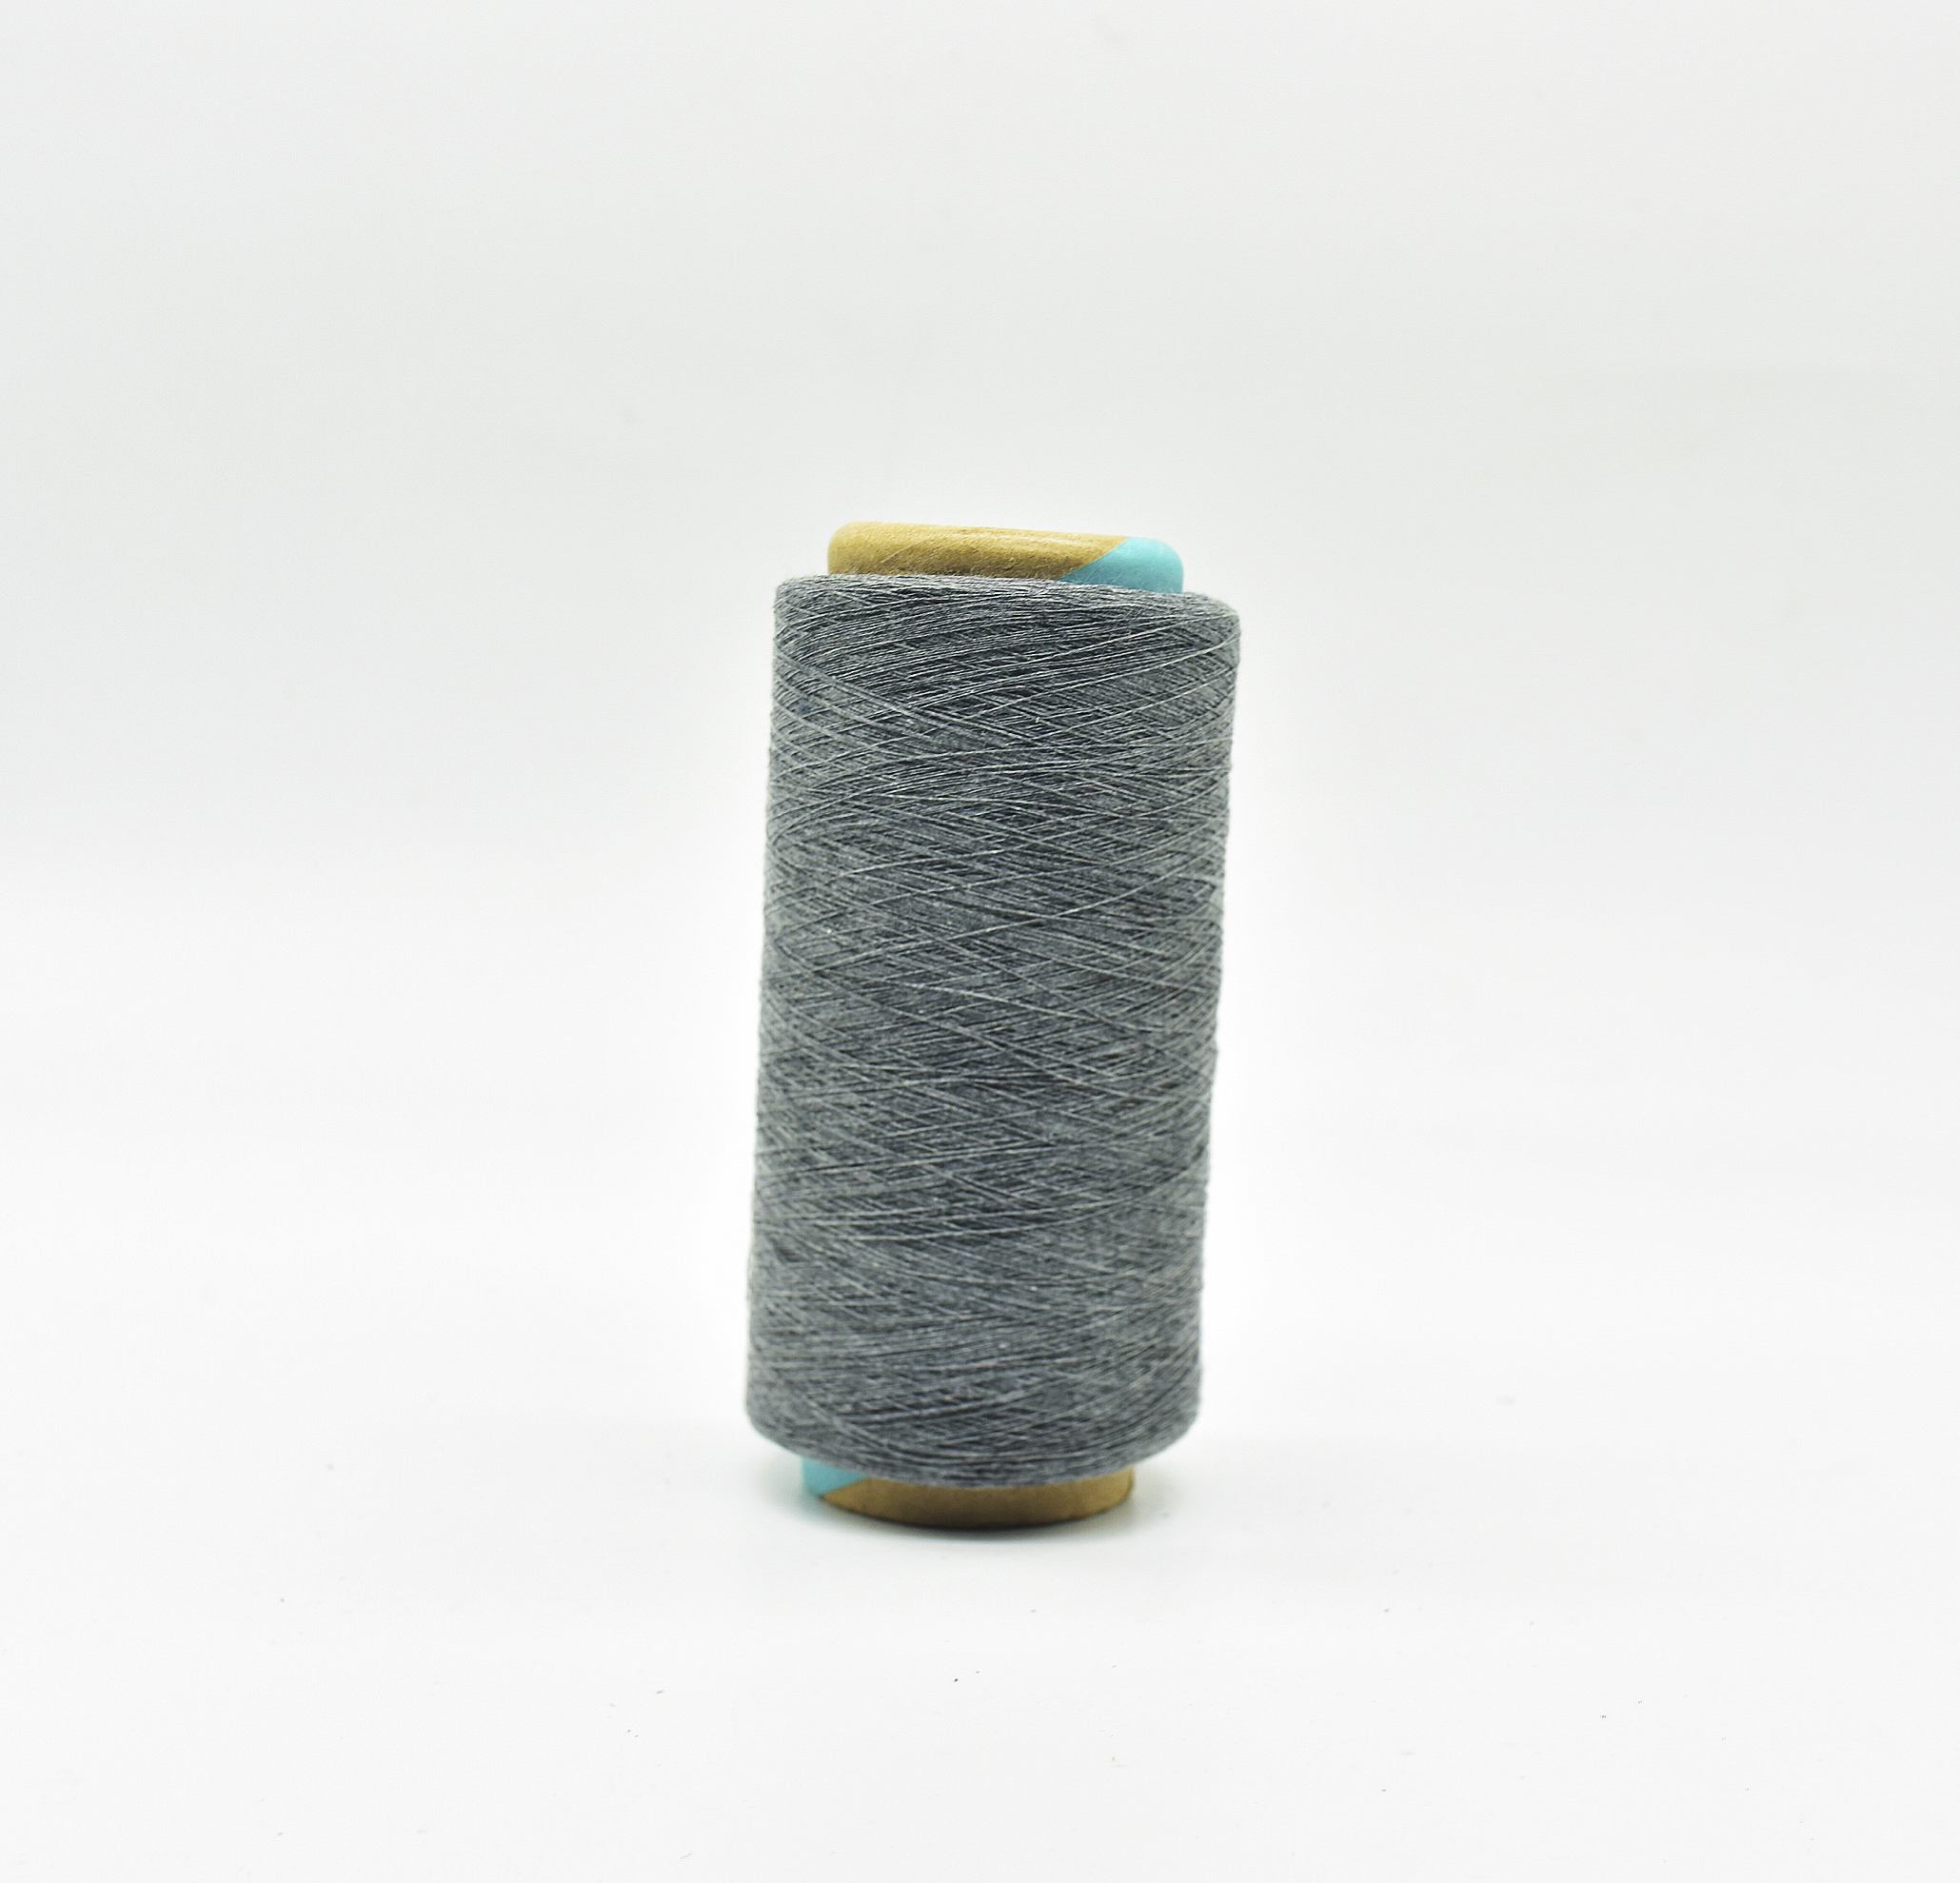 NE 12S melange grey recycled cotton polyester yarn for knitting socks 